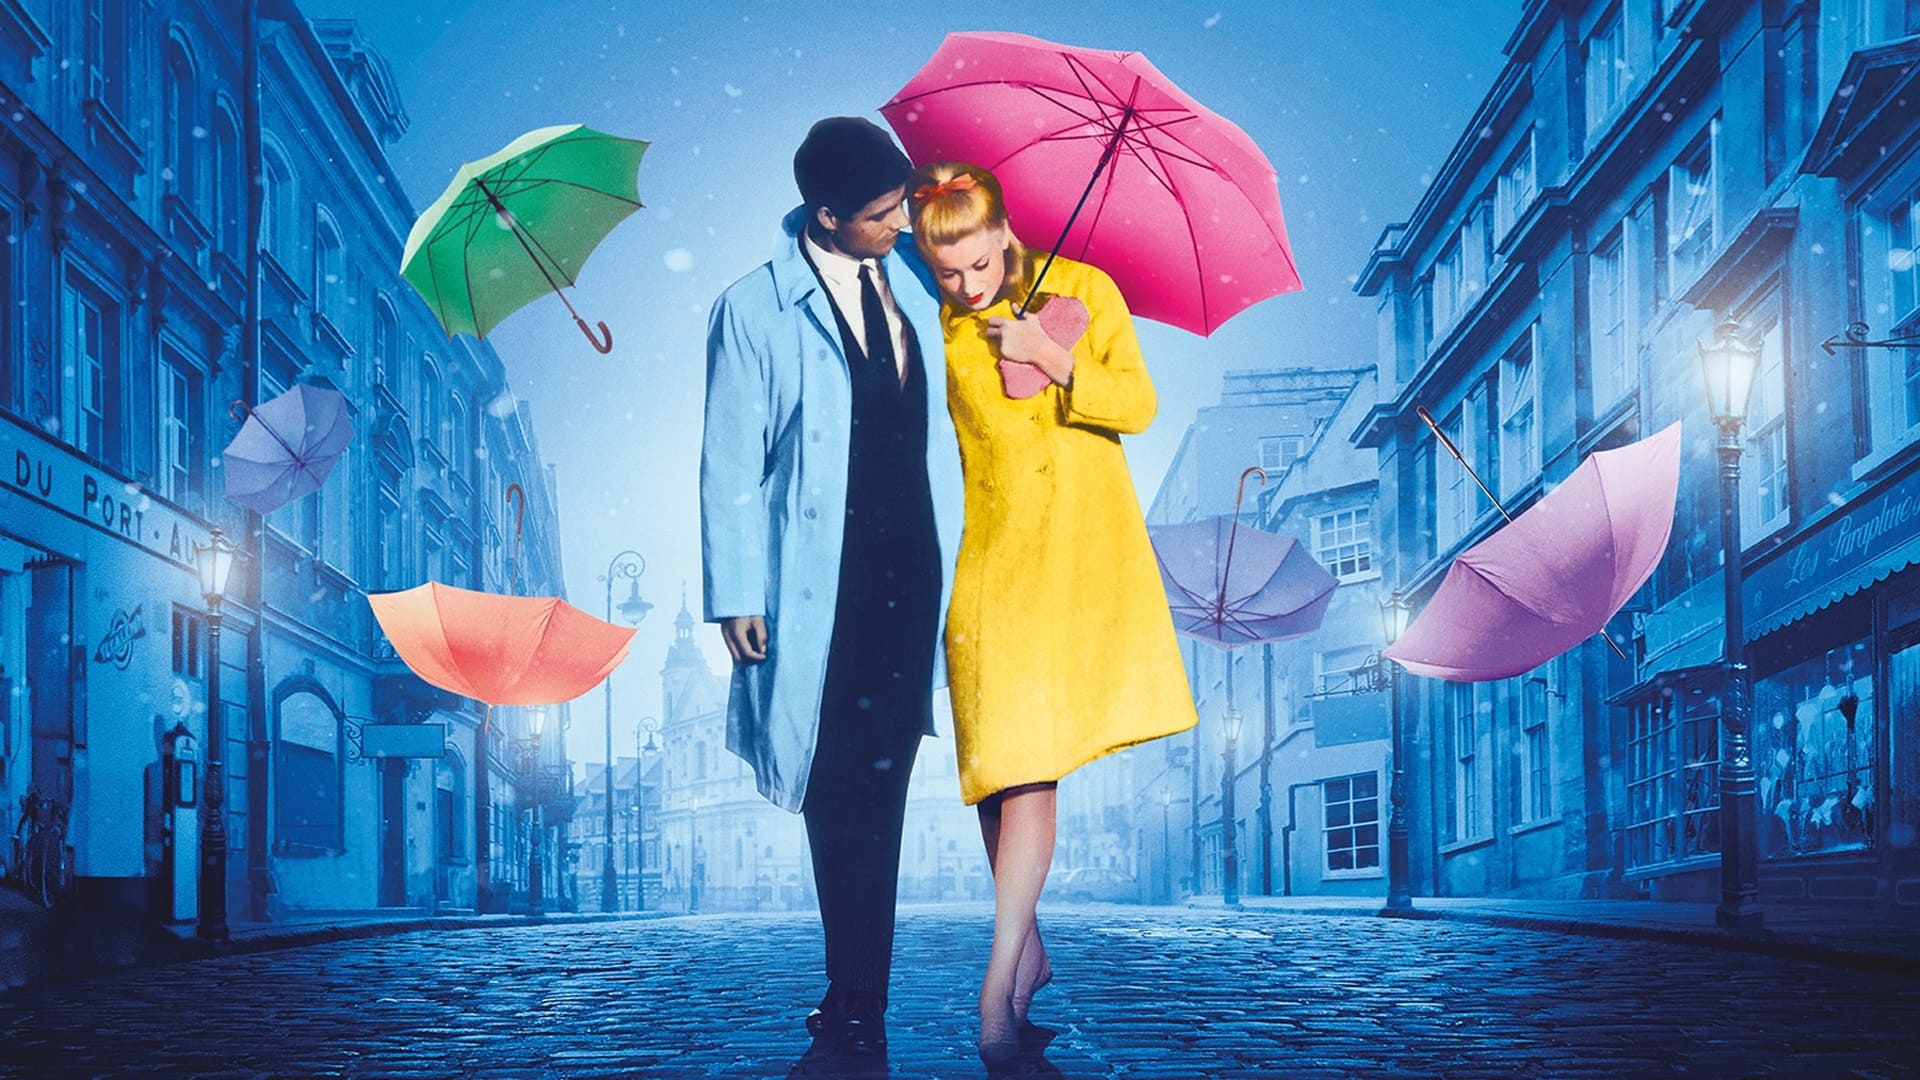 Шербурские зонтики (1964)